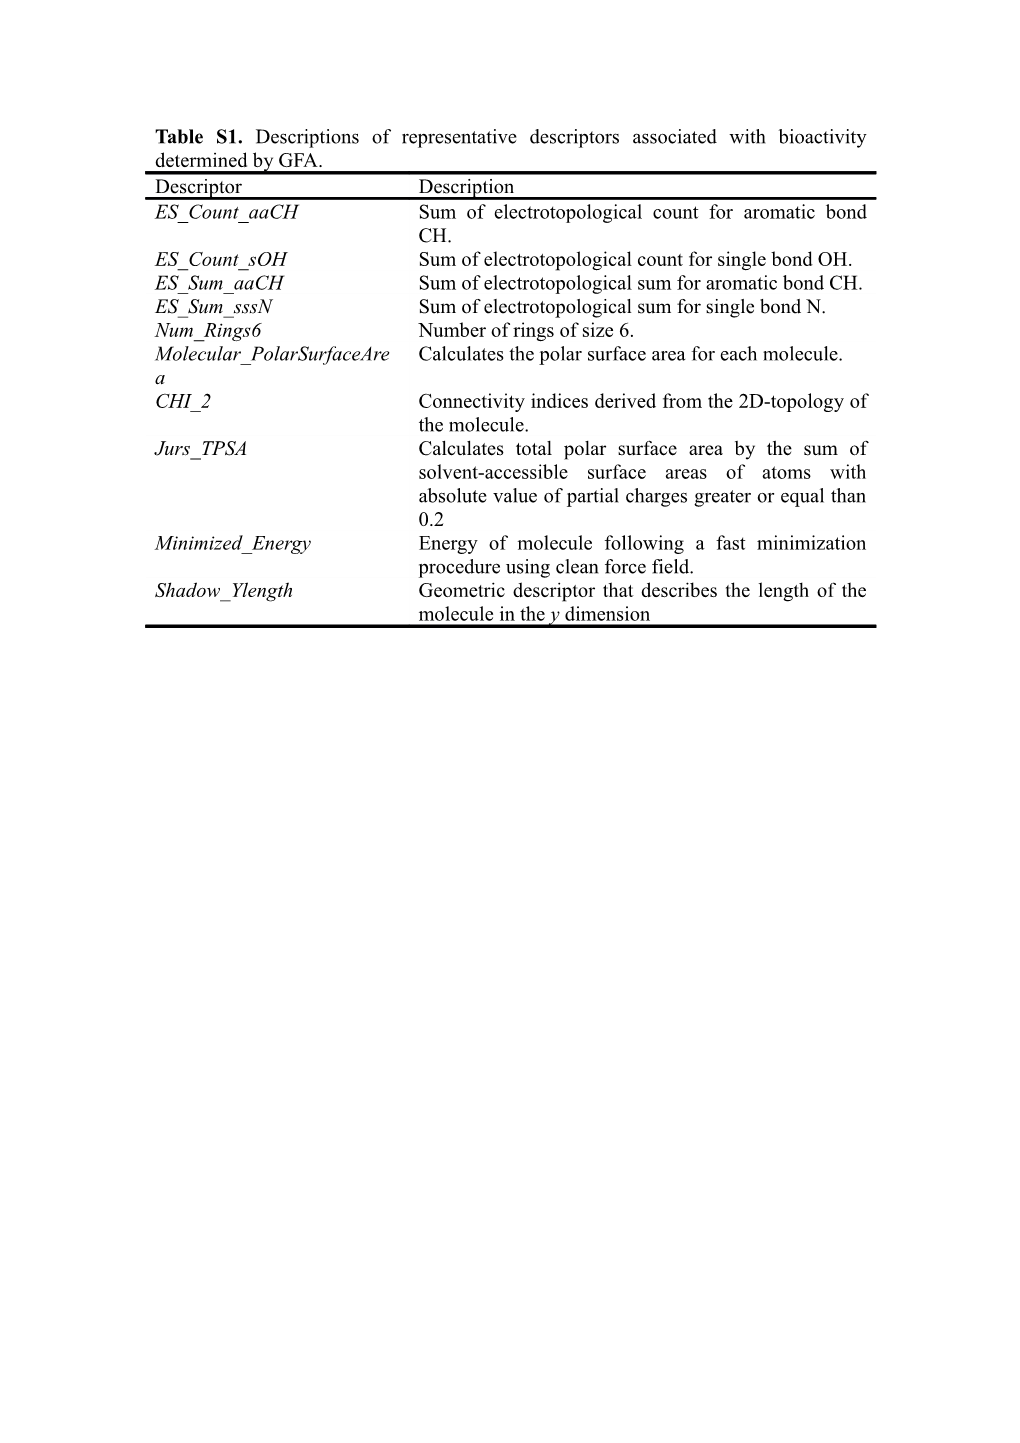 Table S1. Descriptions of Representative Descriptors Associated with Bioactivity Determined